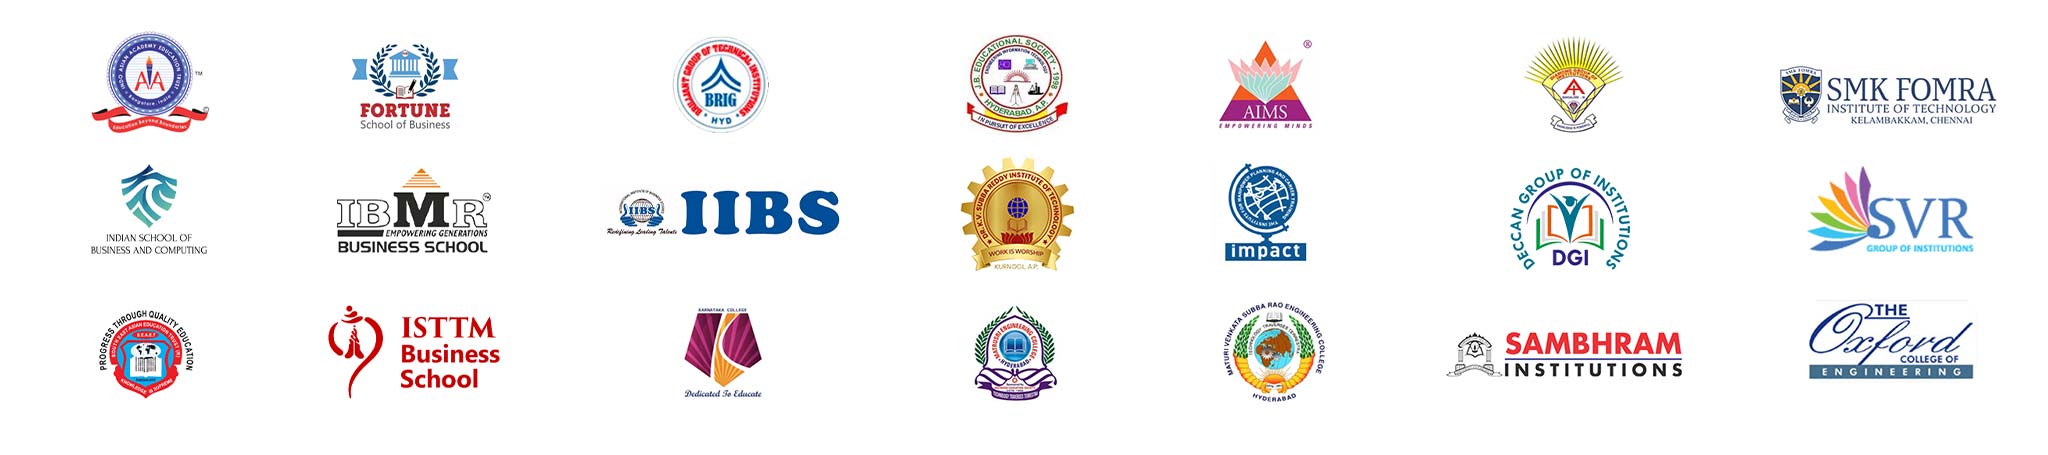 College partner logos